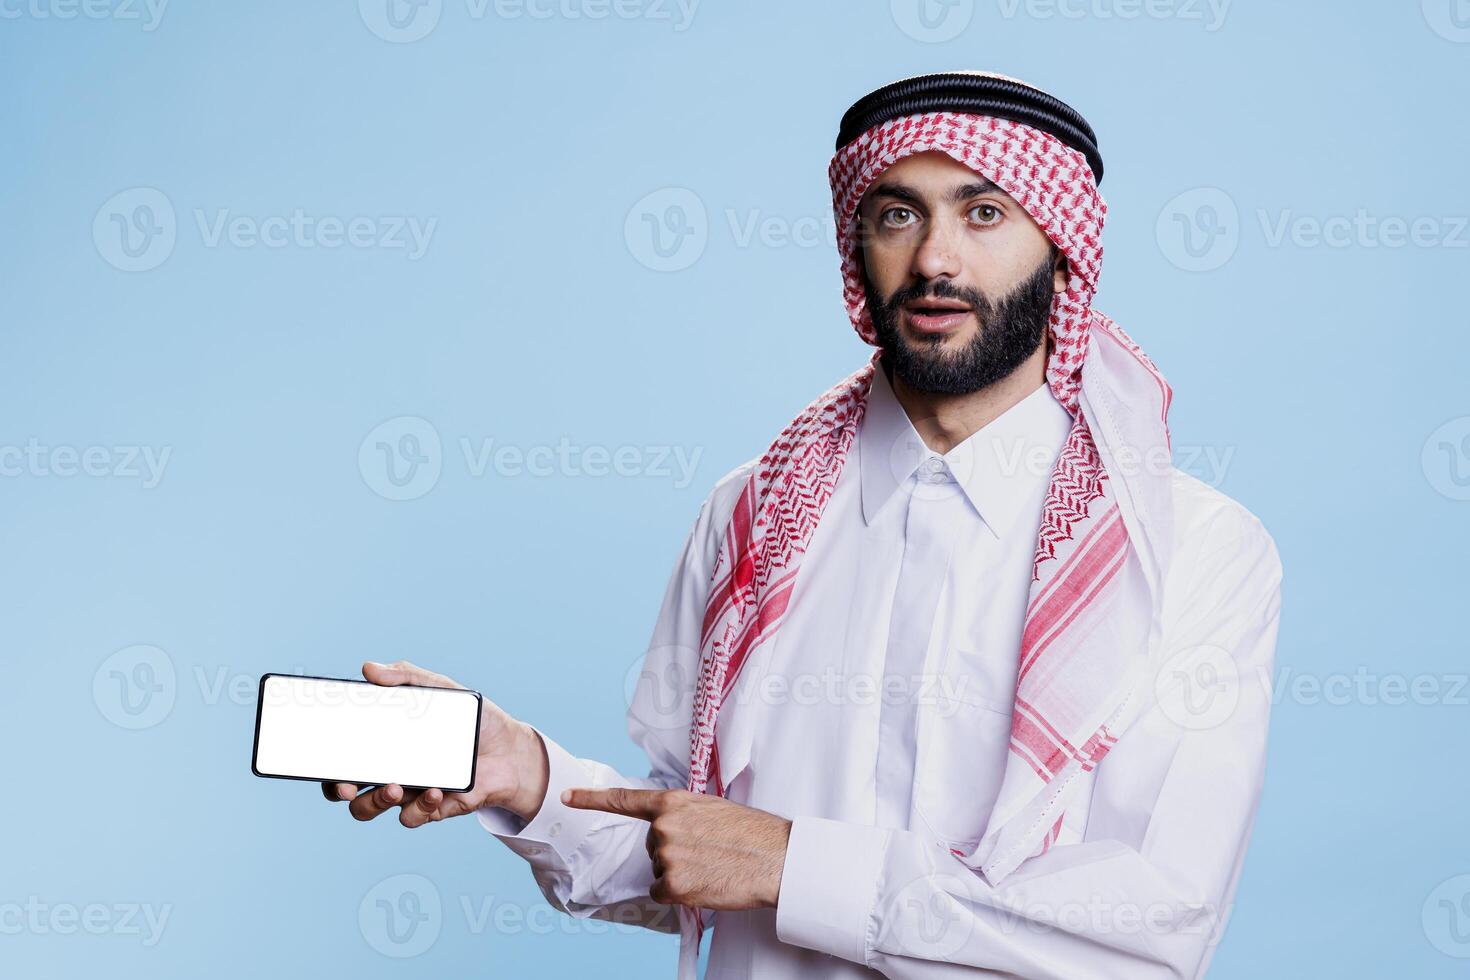 musulmán hombre participación teléfono inteligente con blanco pantalla en horizontal modo y señalando con dedo. árabe persona en tradicional ropa demostración vacío pantalla táctil y mirando a cámara foto